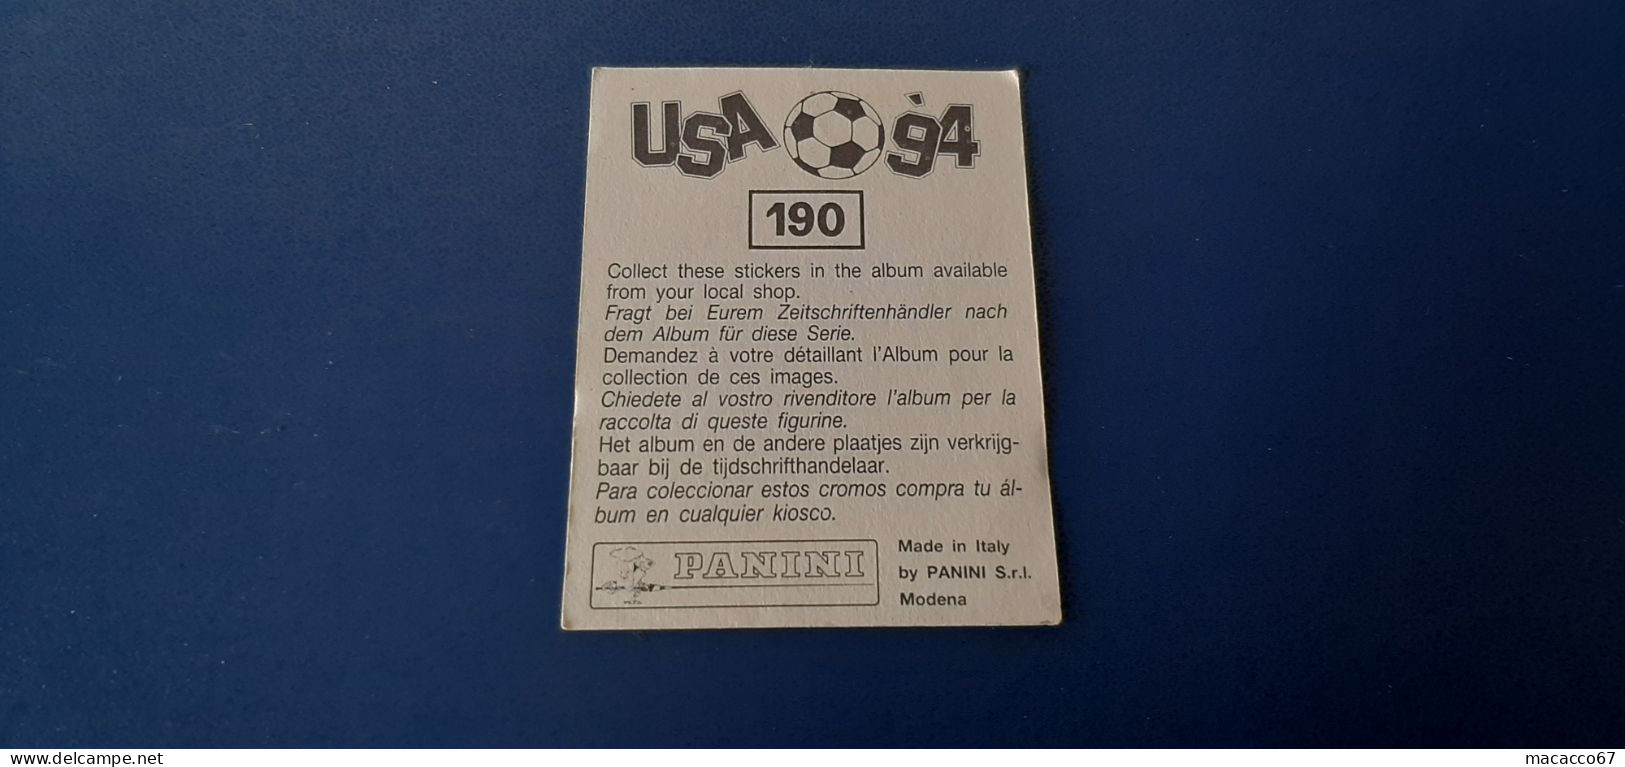 Figurina Panini WM USA 94 - 190 Alcorta Spagna - Italiaanse Uitgave